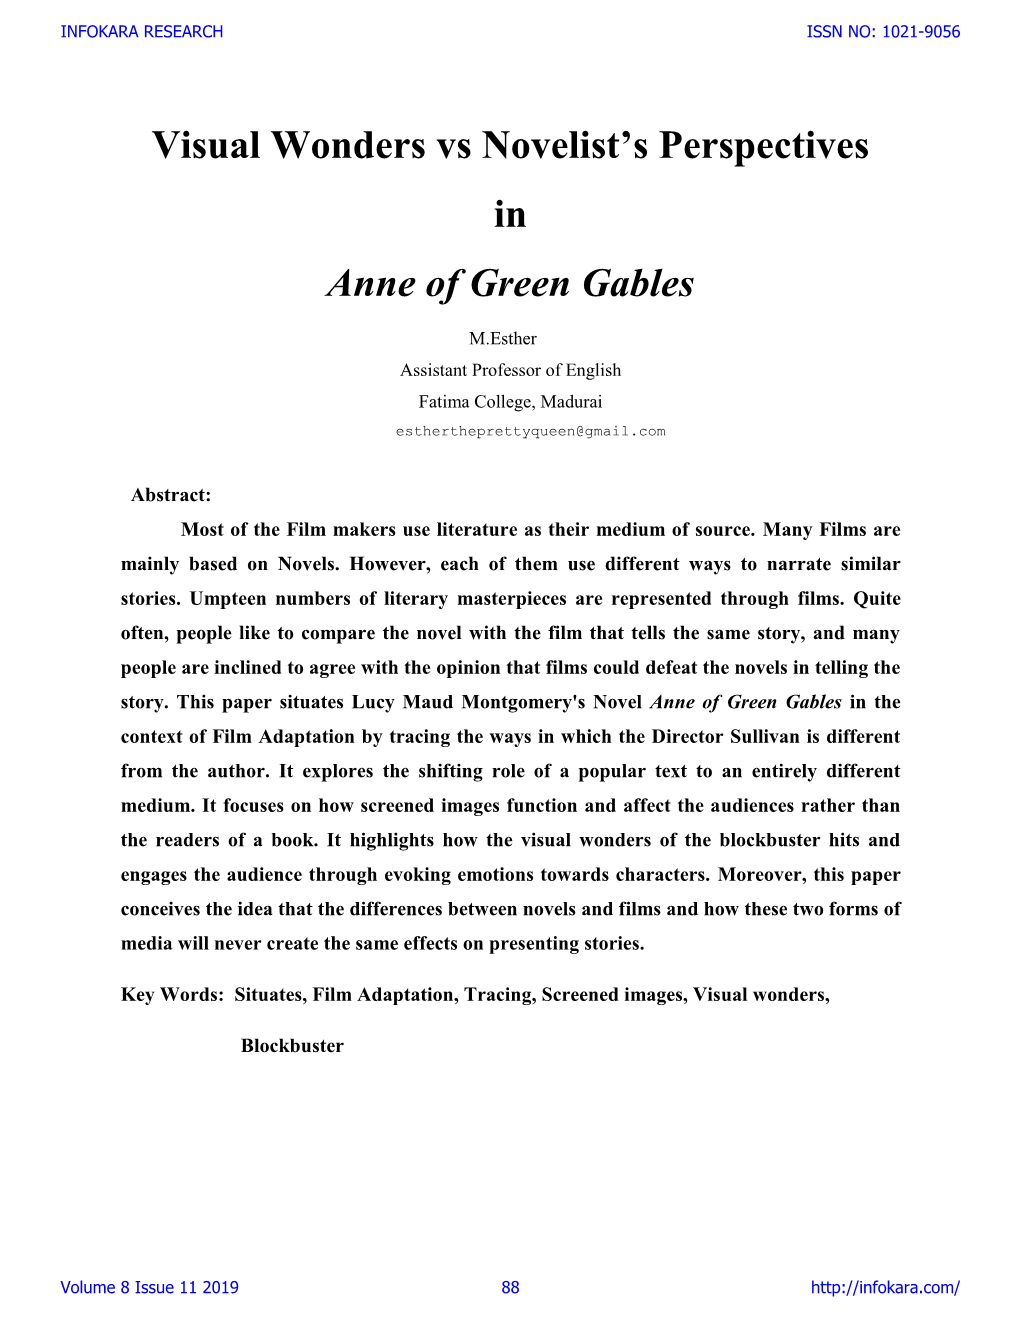 Visual Wonders Vs Novelist's Perspectives in Anne of Green Gables